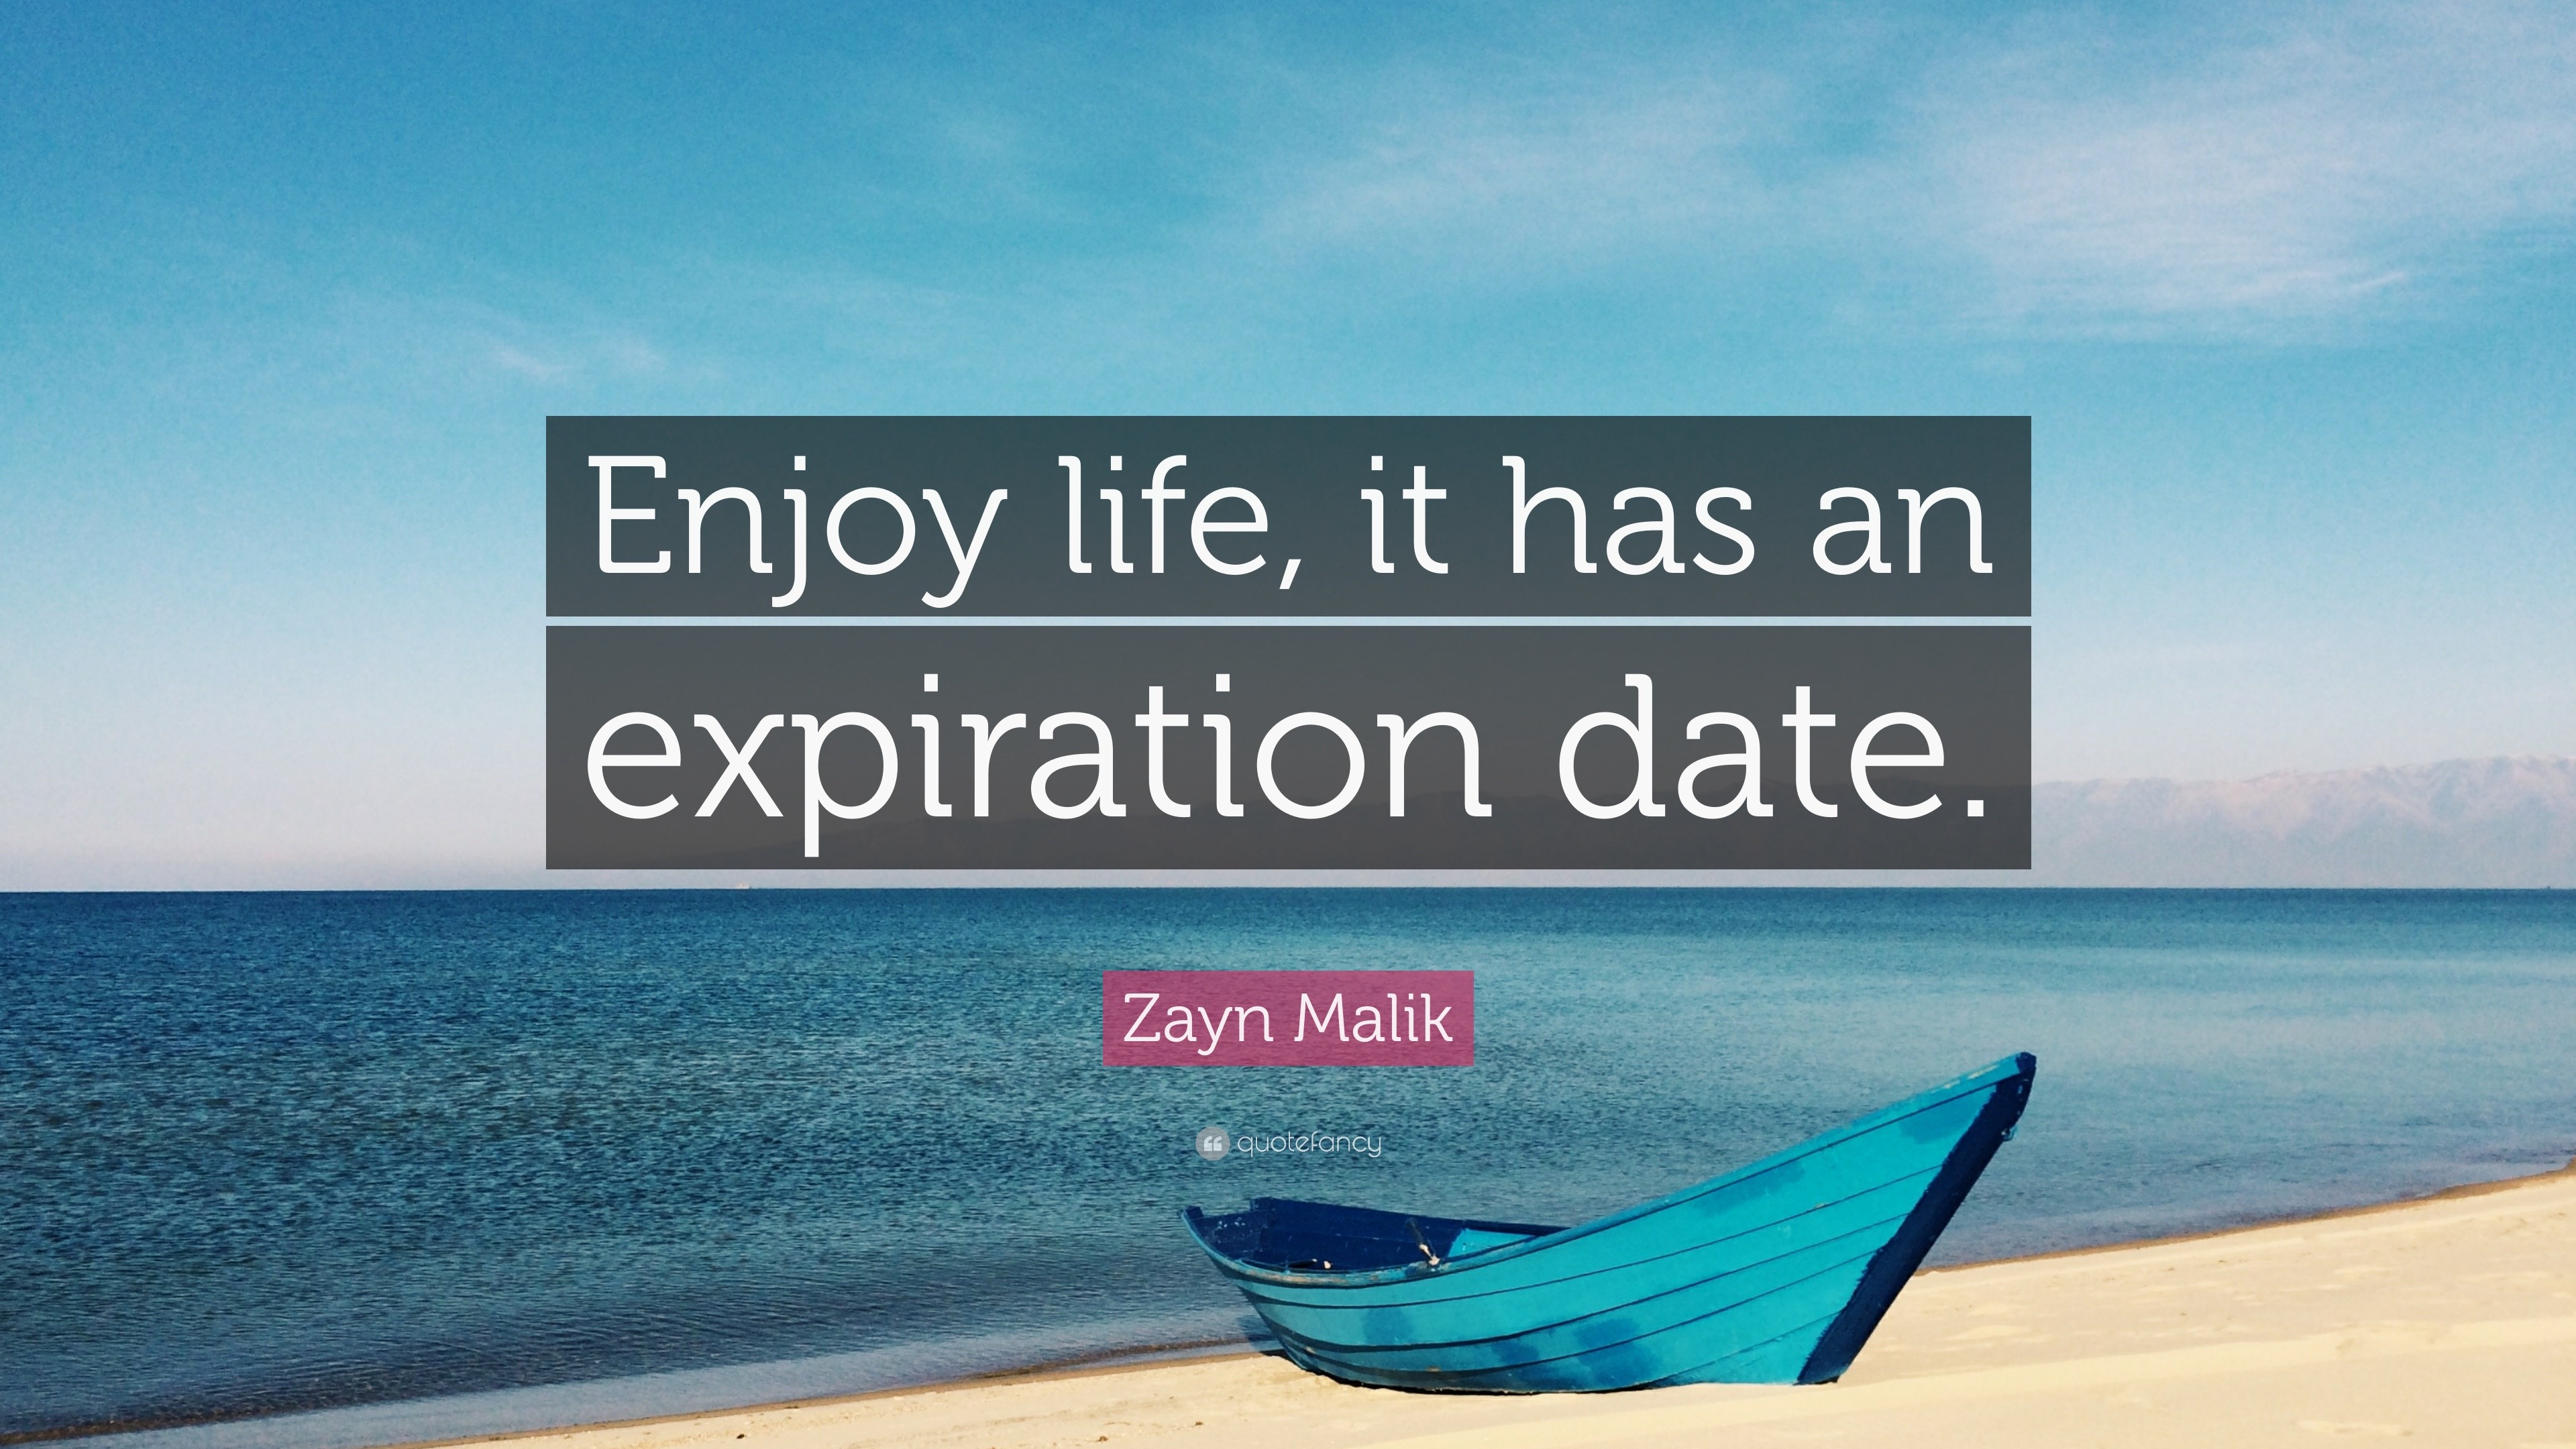 Zayn Malik Quote “Enjoy life it has an expiration date ”